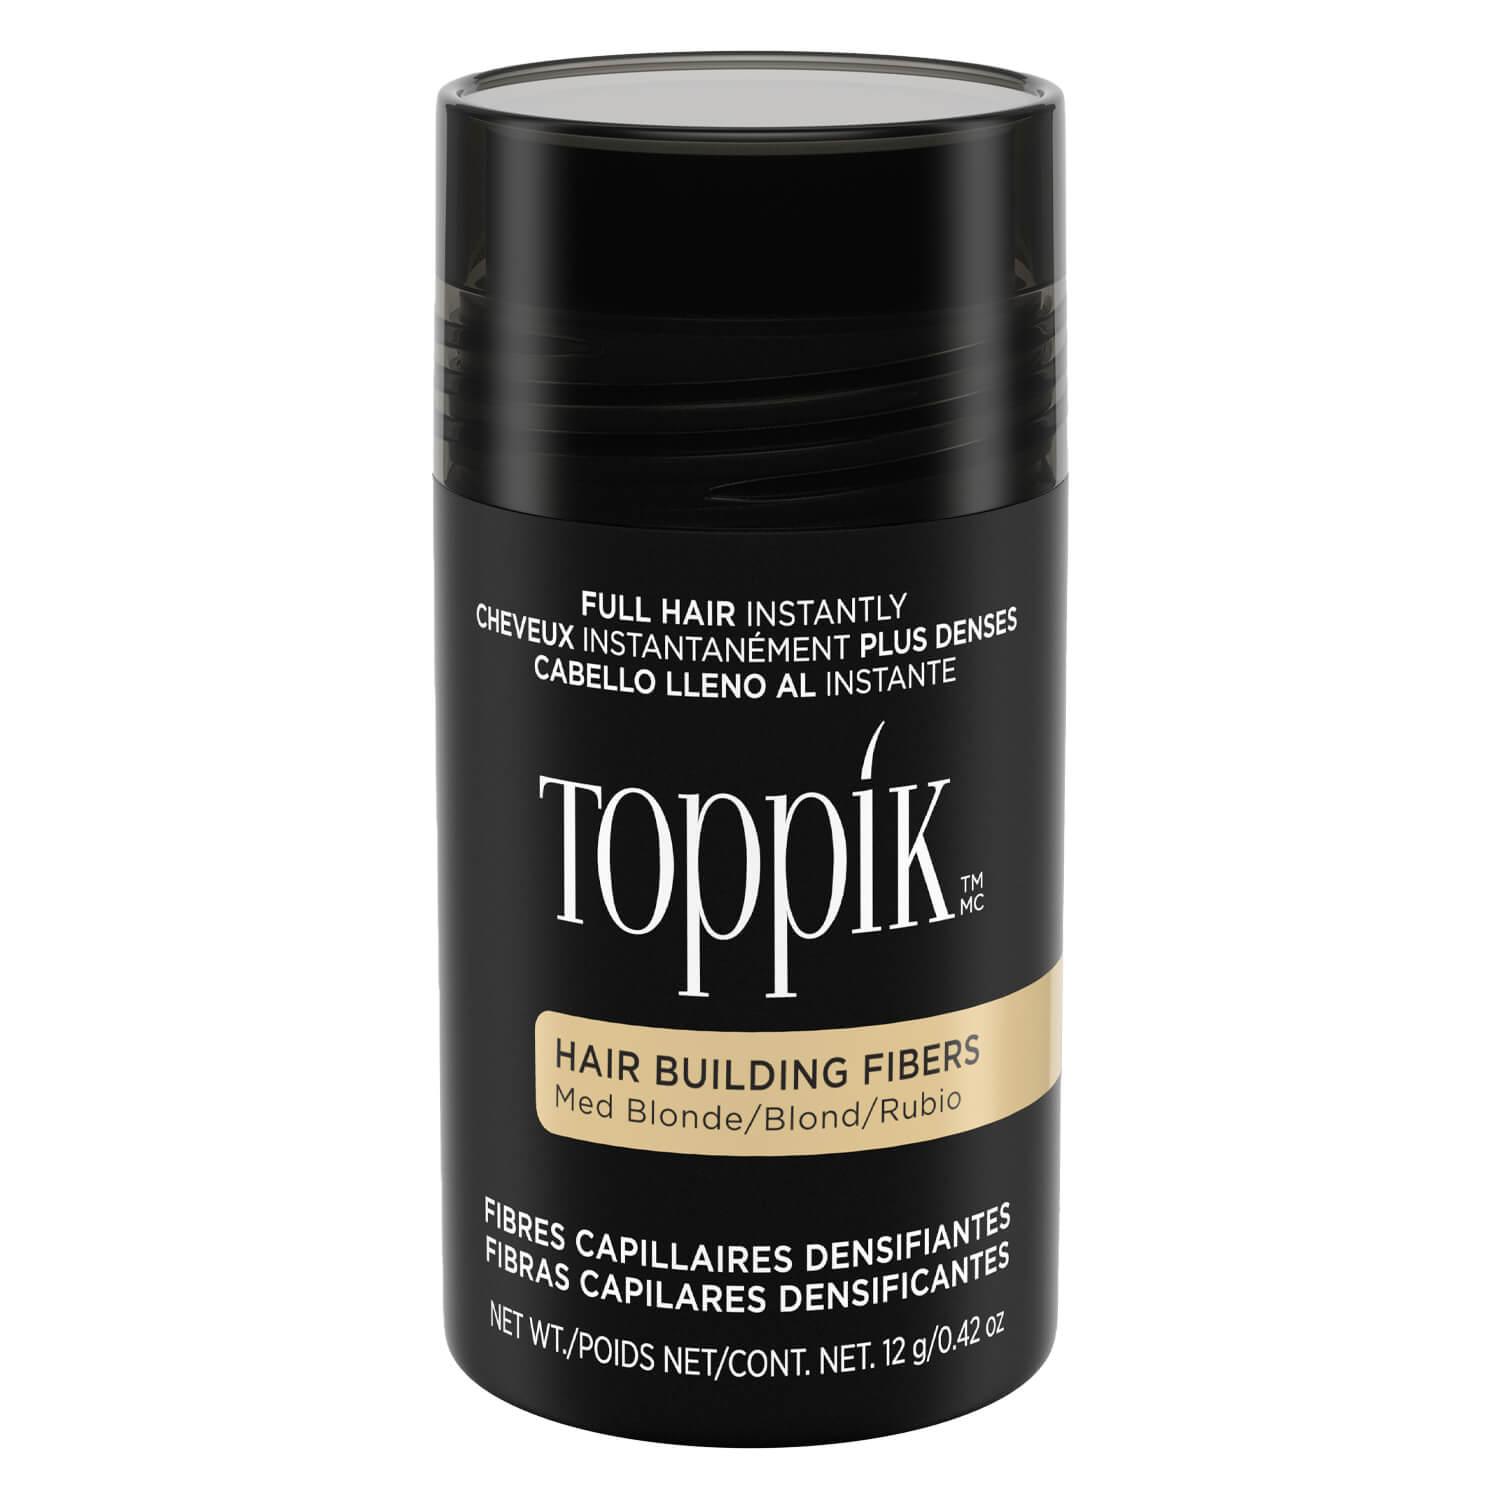 Toppik - Hair Building Fibers Medium Blonde